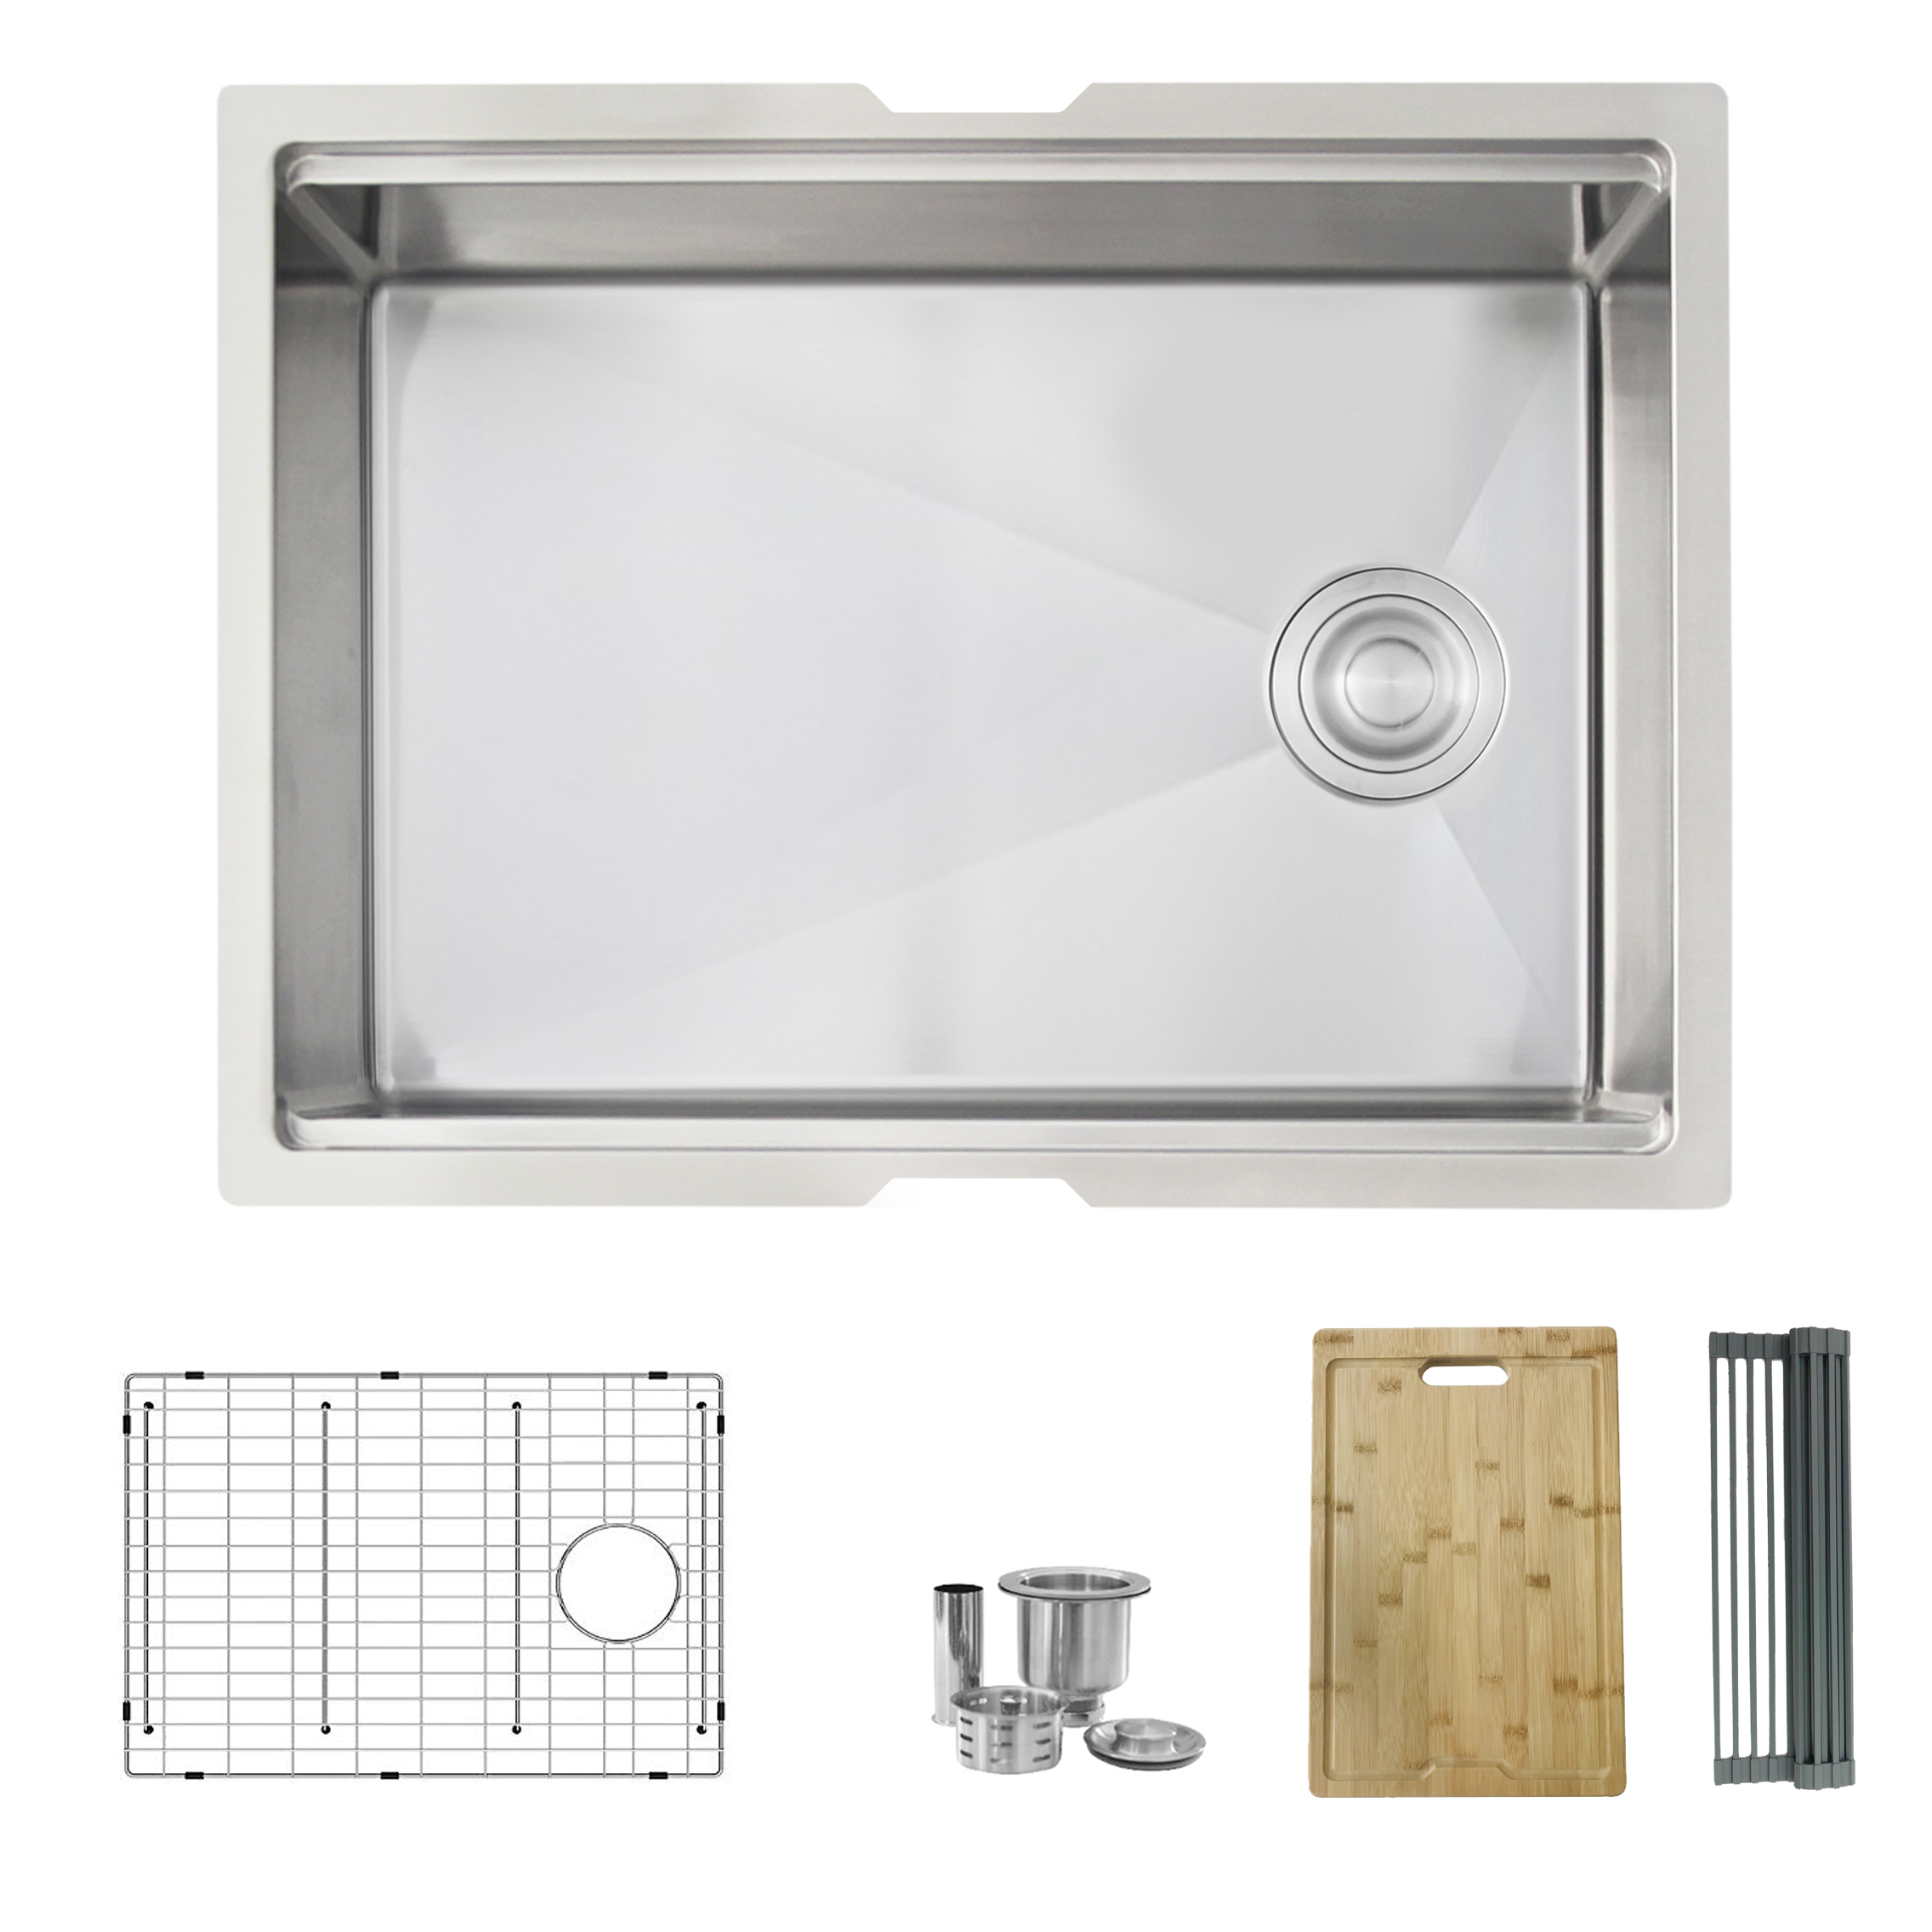 STYLISH 25 inch Workstation Single Bowl Undermount 16 Gauge Stainless Steel Kitchen Sink with Built in Accessories